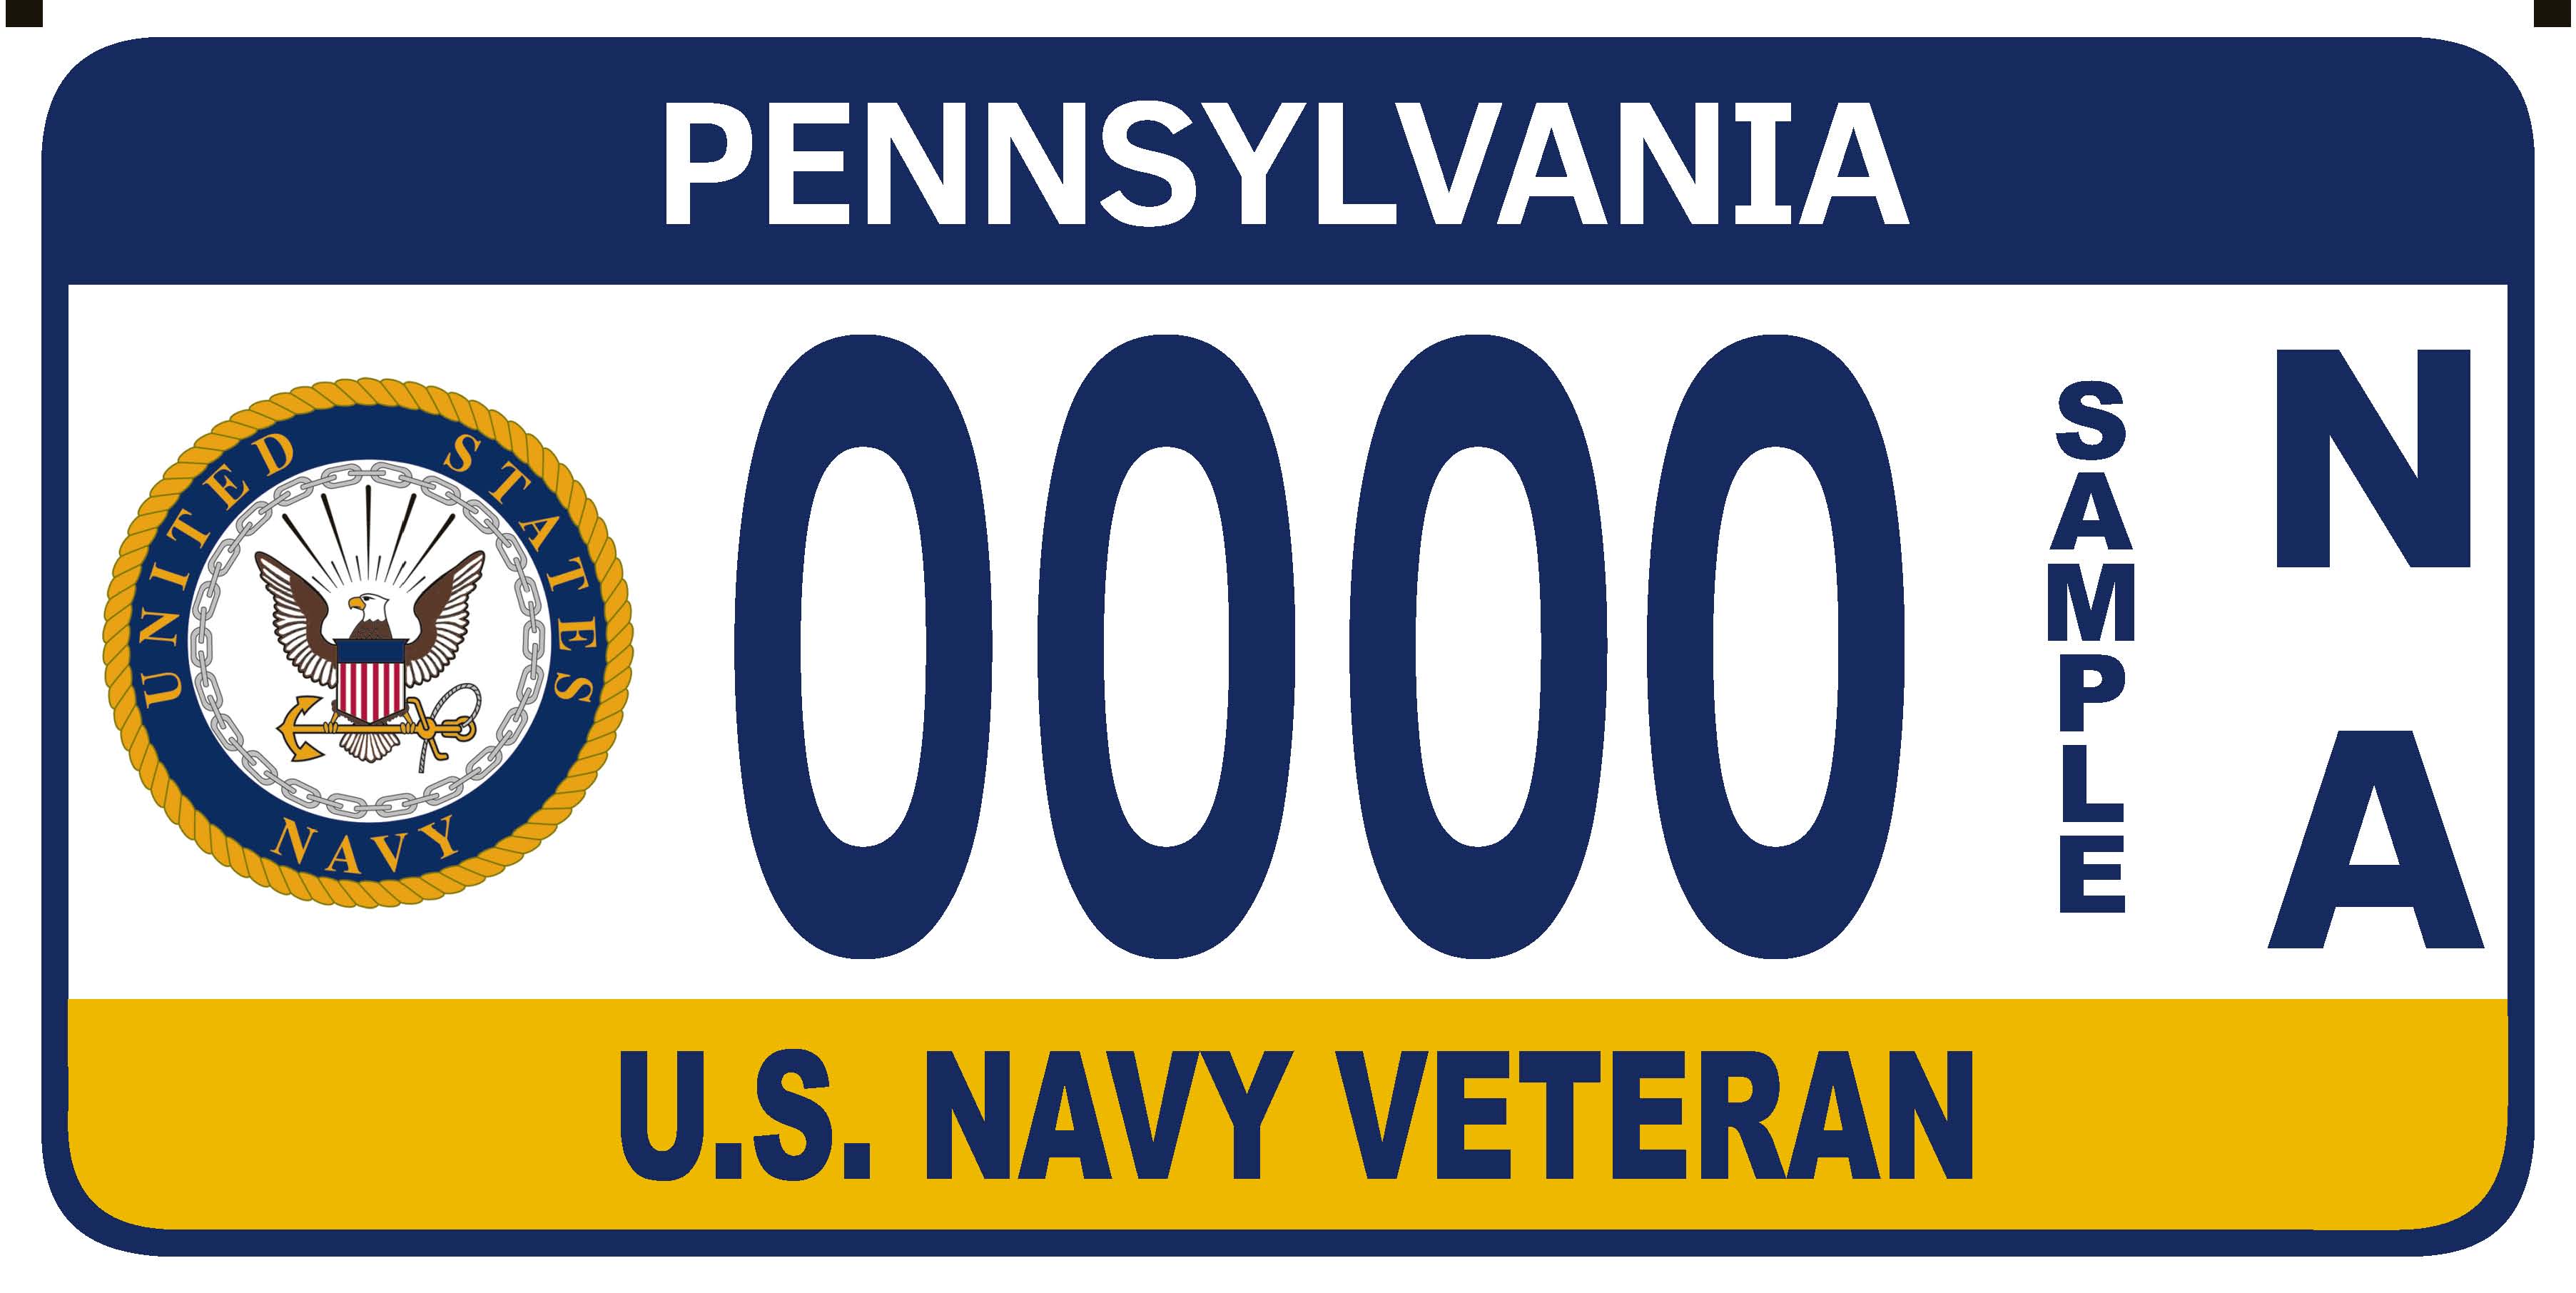 U.S. Navy Veteran plate